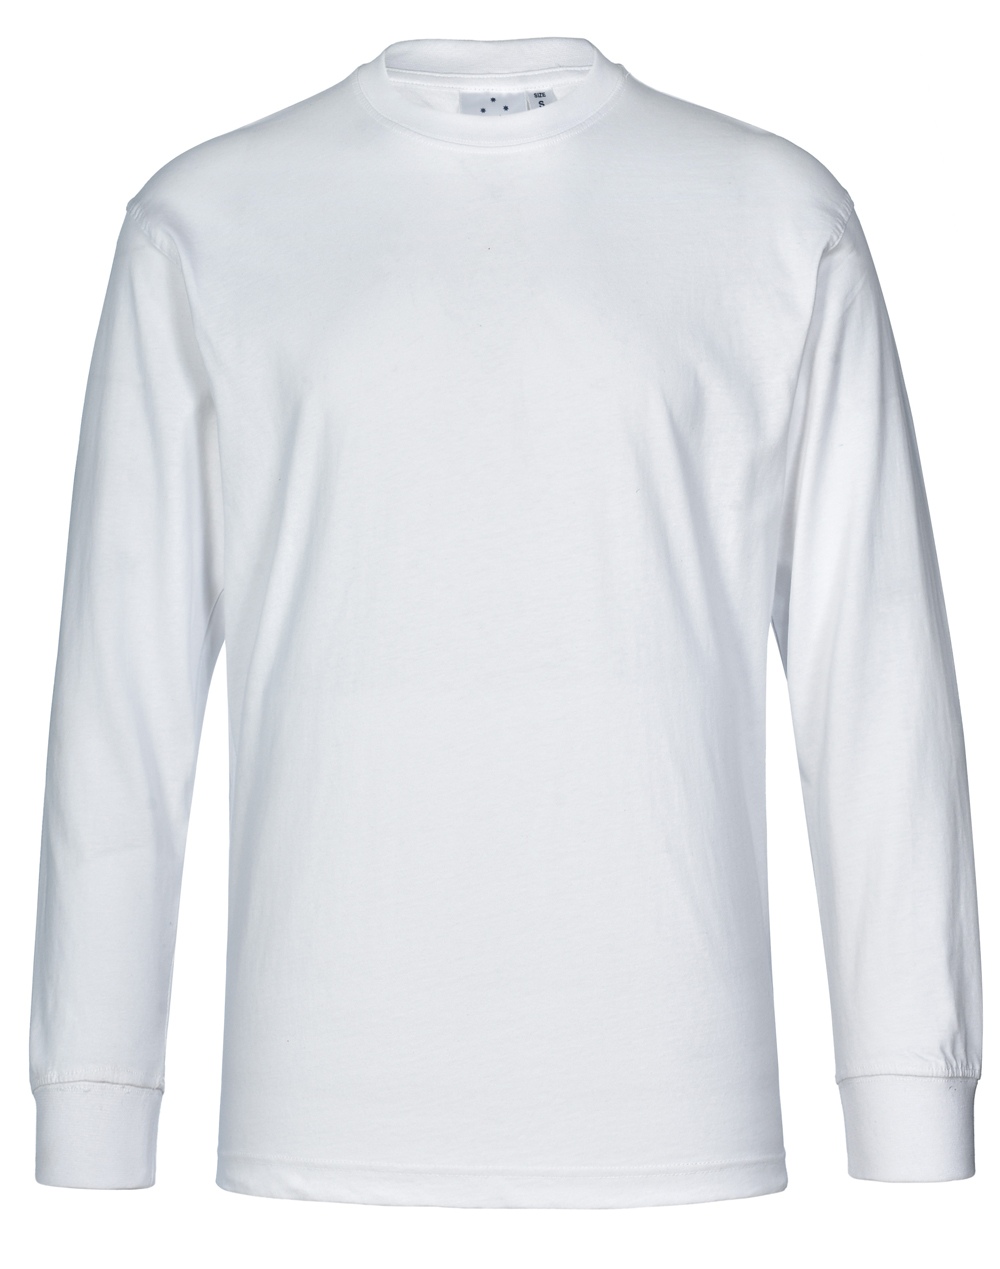 Custom Made (Navy) Men's London Long Sleeve Crew Neck T-Shirts Online Australia